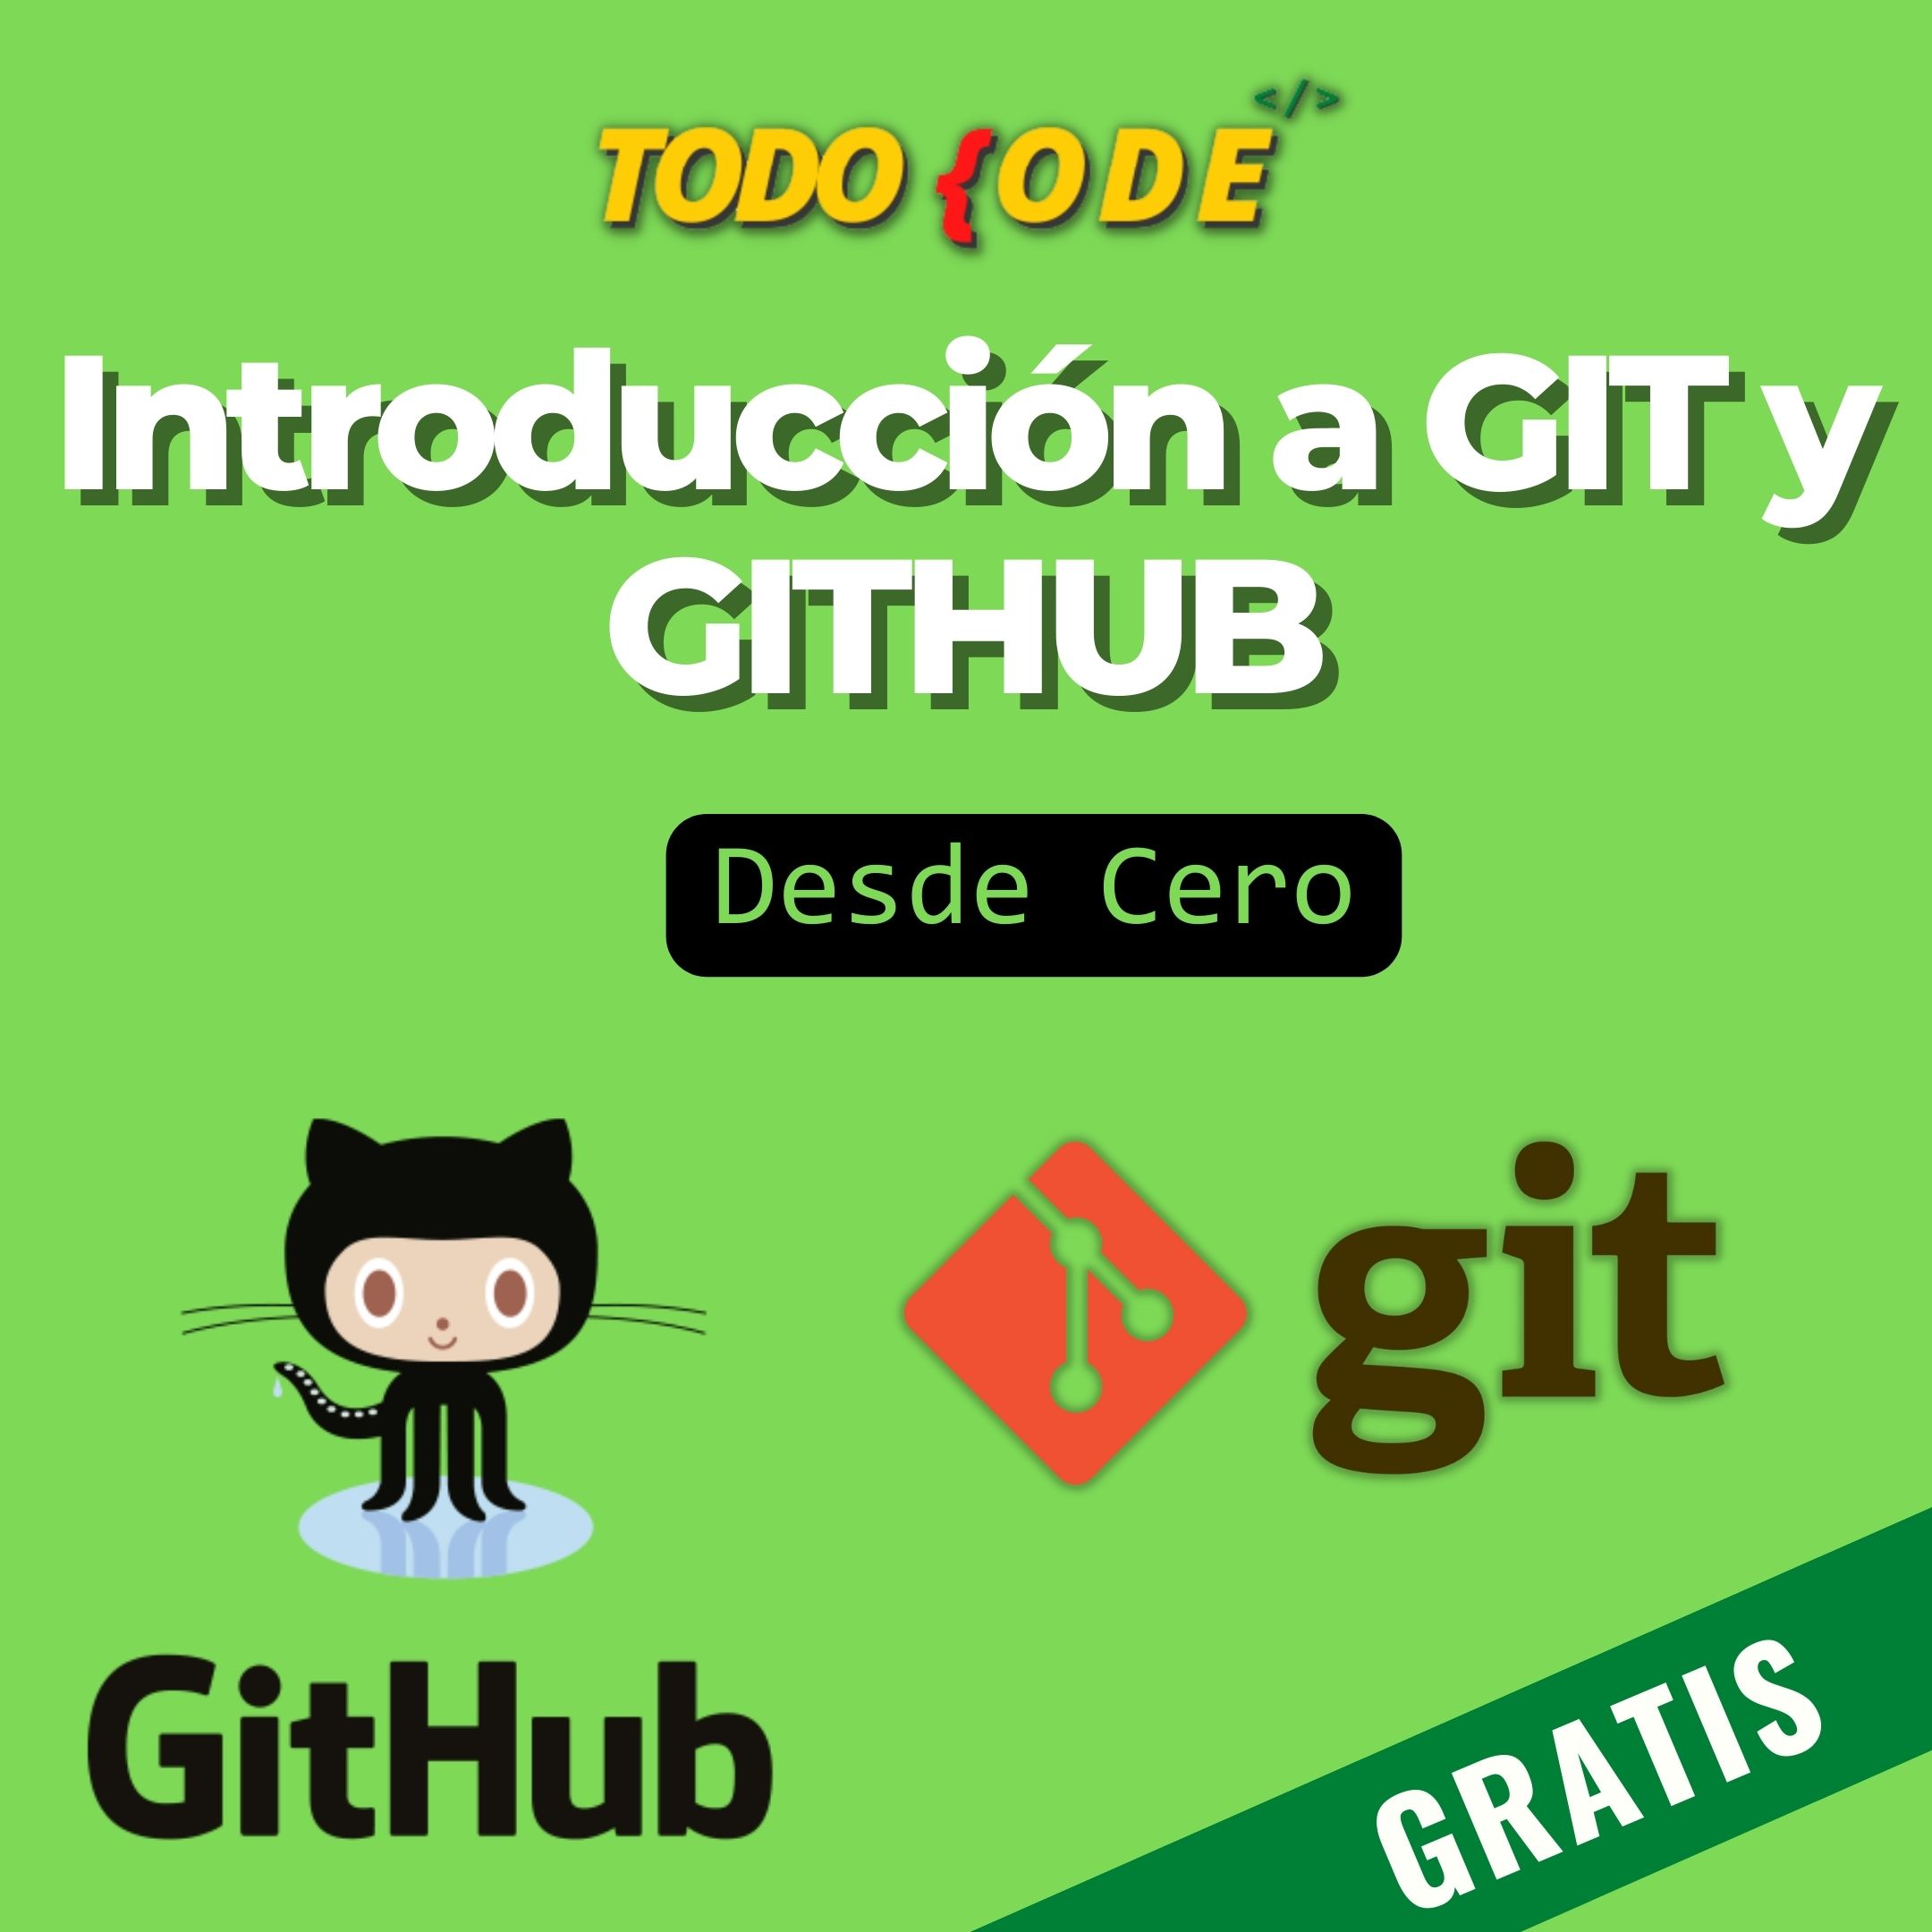 Git y GitHub desde cero